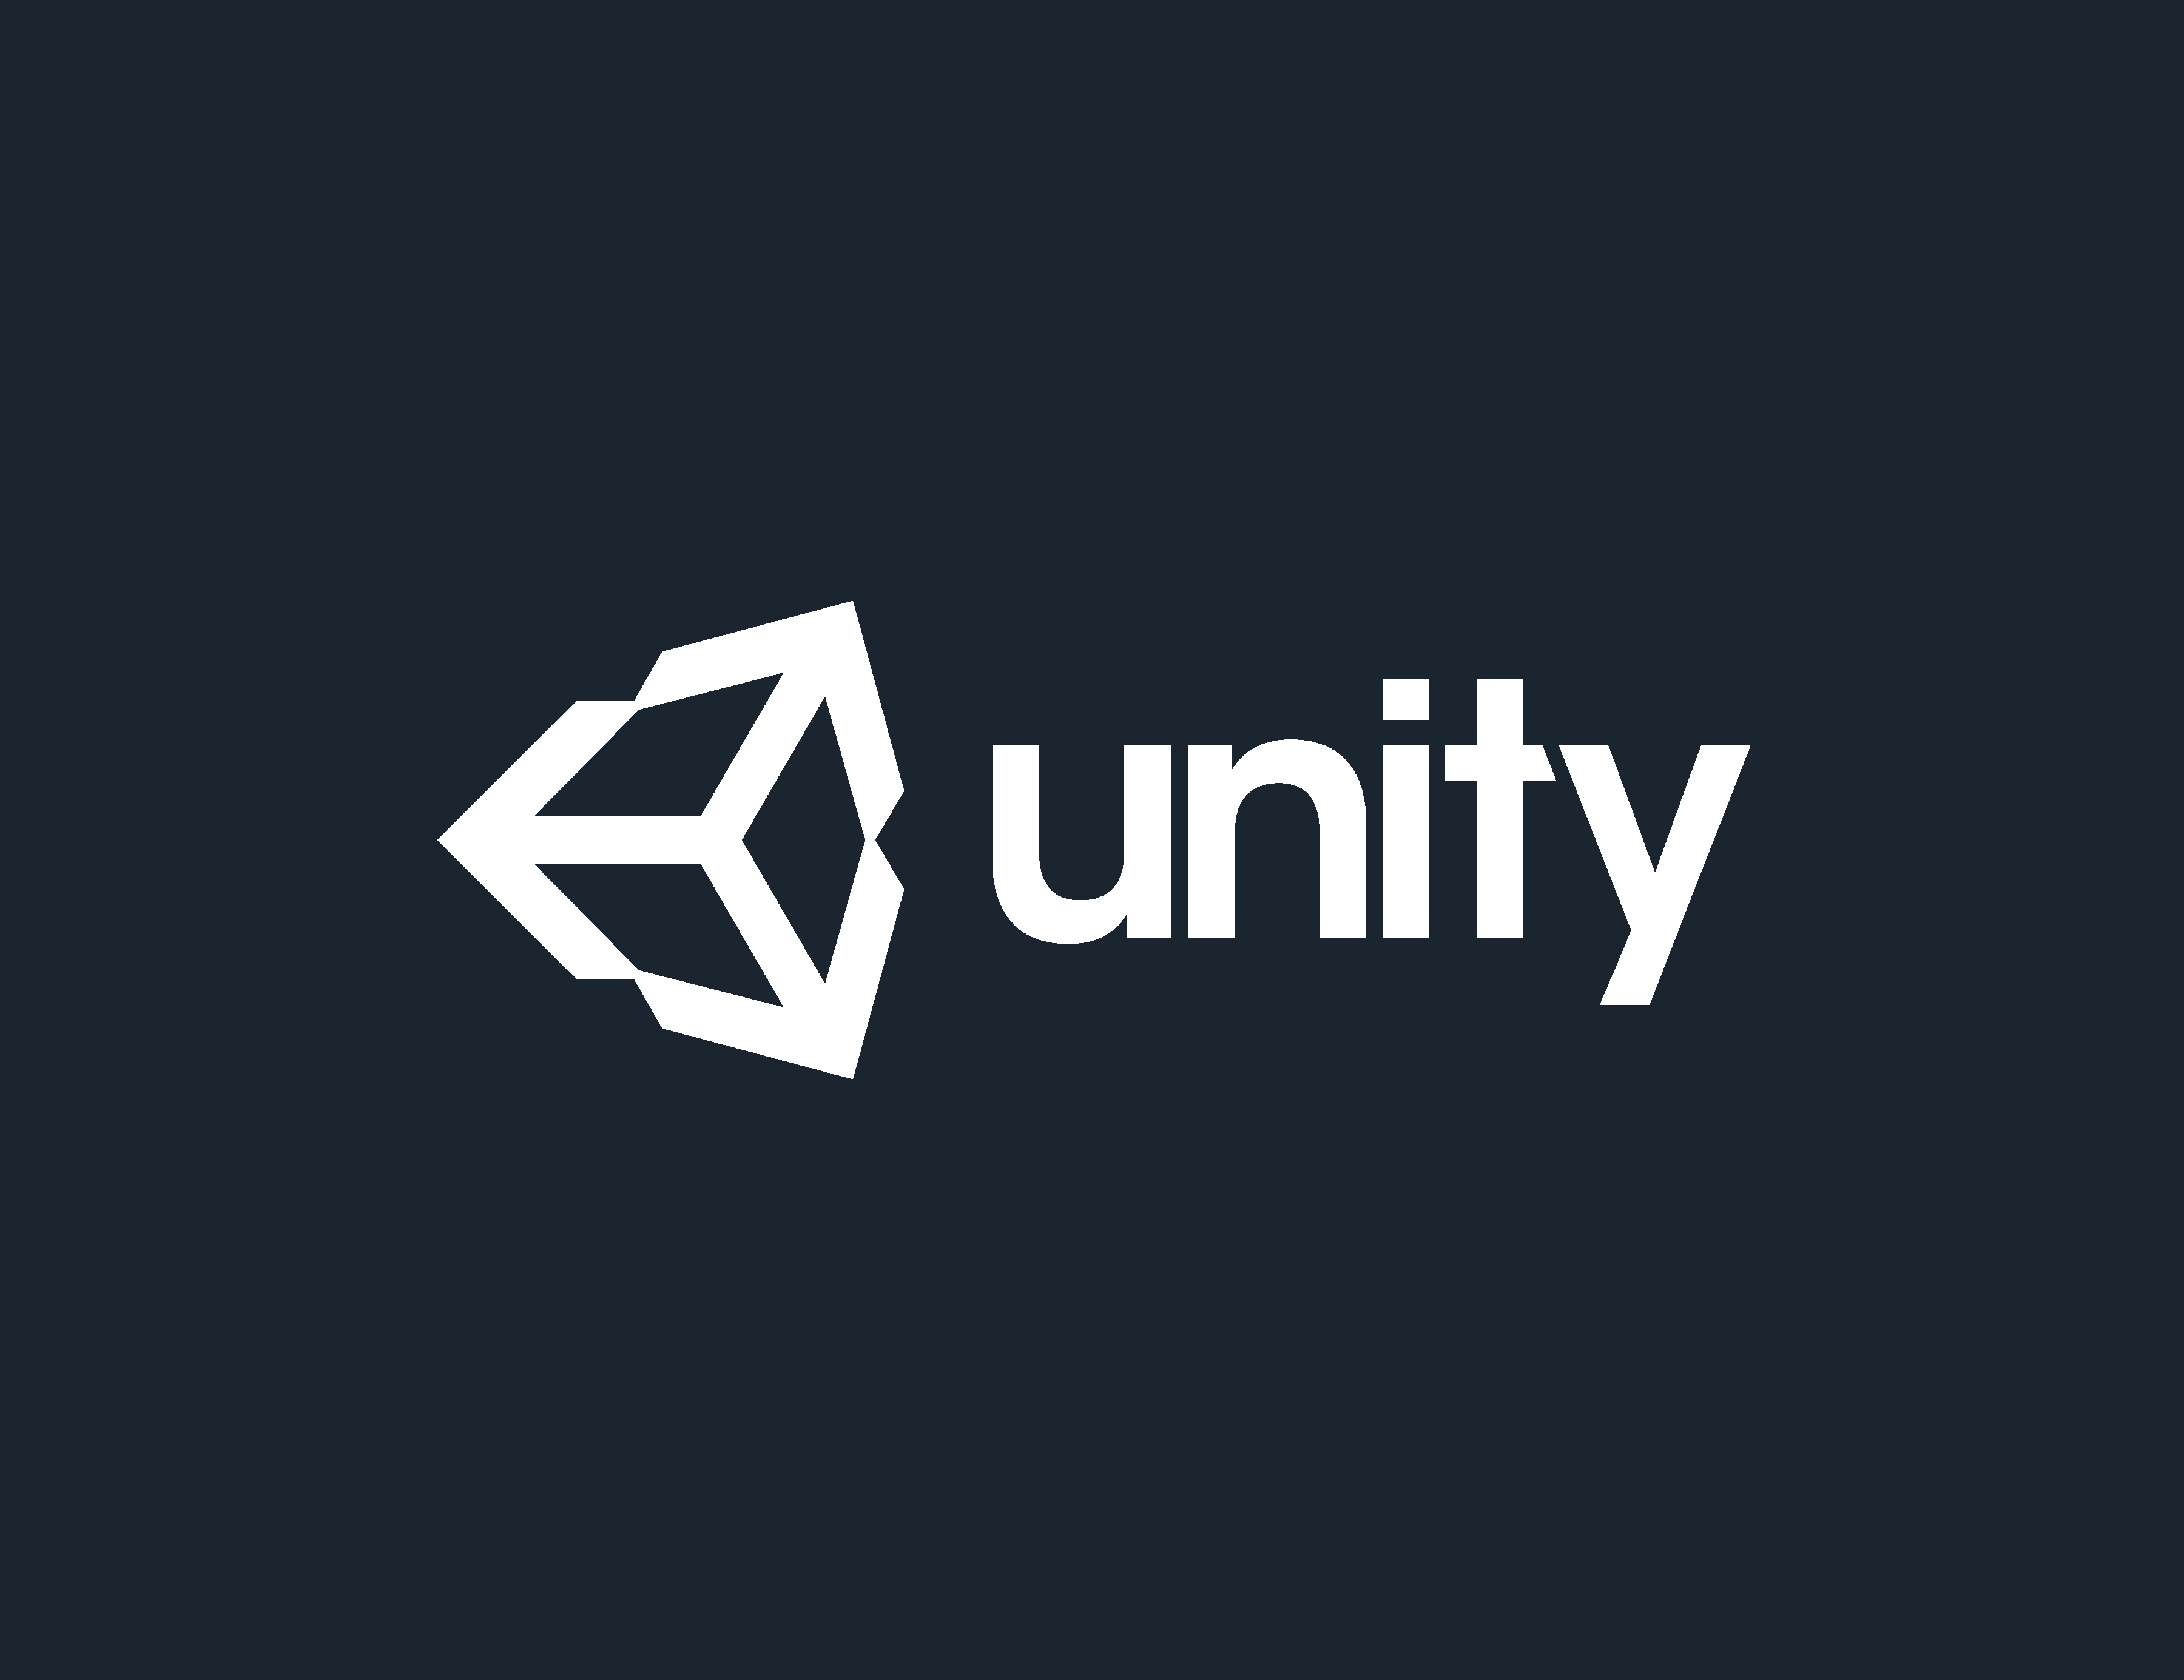 comment-creer-jeu-de-combat-unity-logiciel